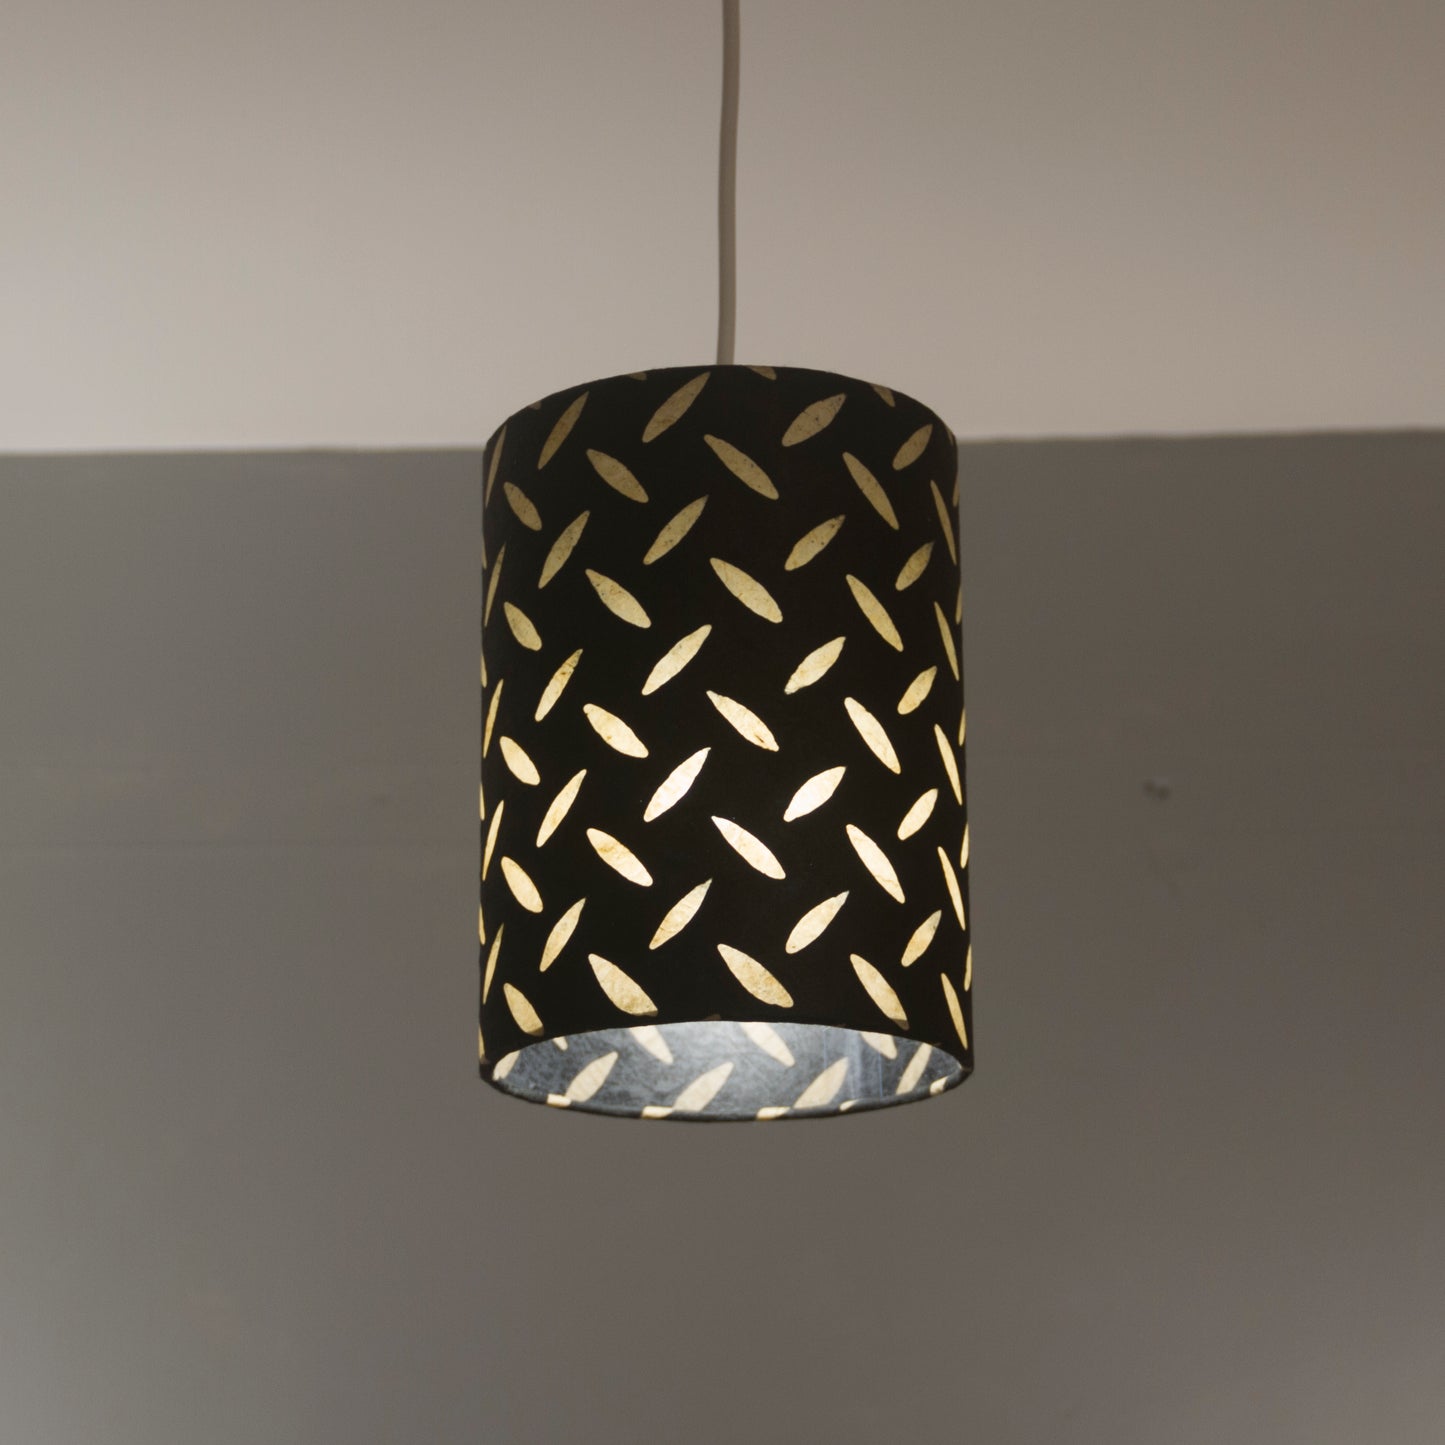 2 Tier Lamp Shade - P11 - Batik Tread Plate Black, 40cm x 20cm & 30cm x 15cm